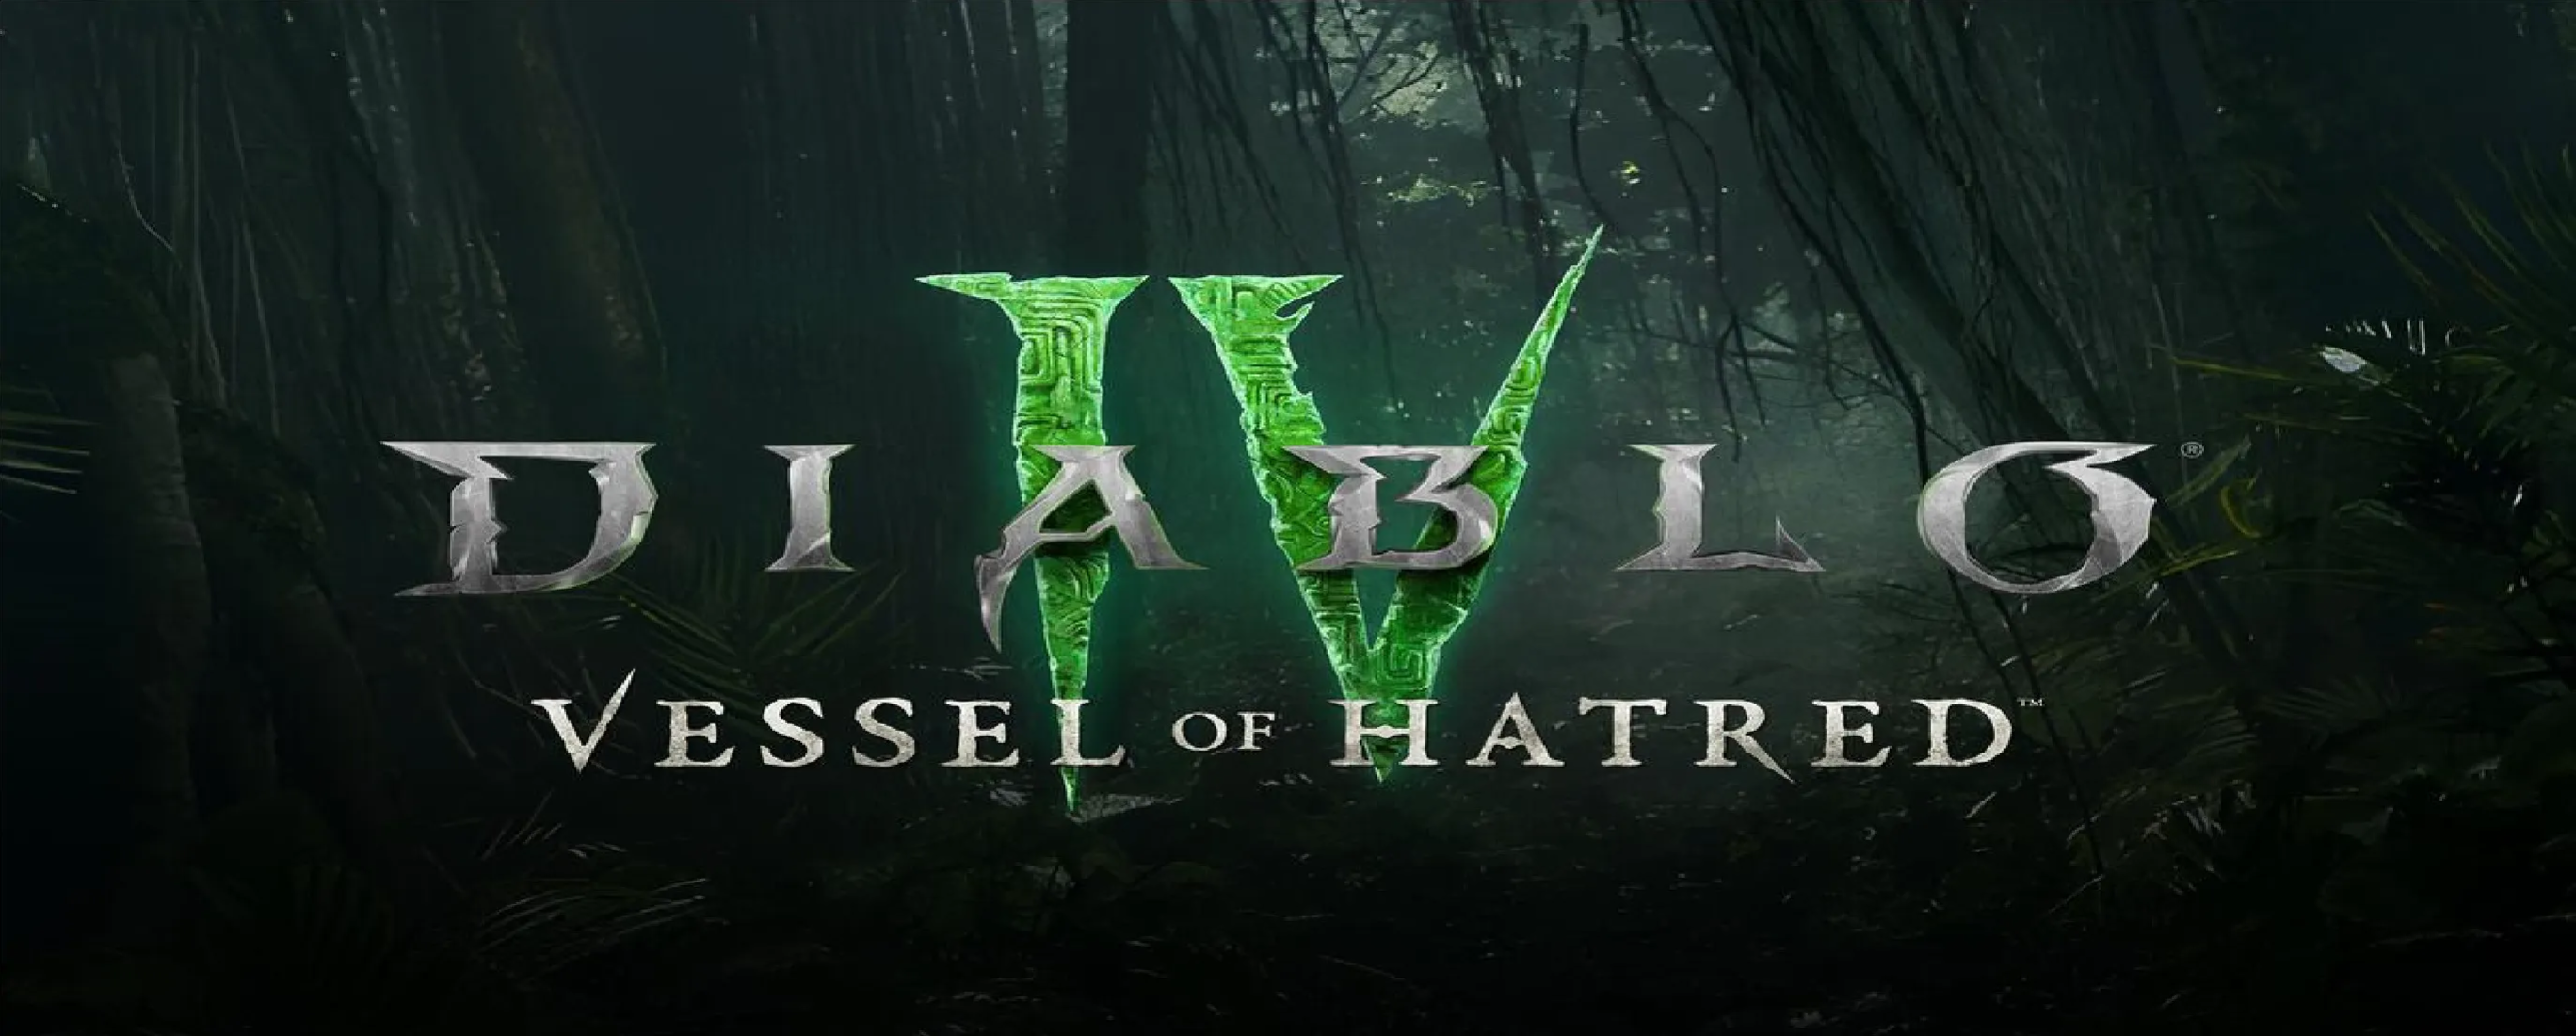 Diablo 4 Vessel of Hatred expansion art seemingly taking place in Kurast.